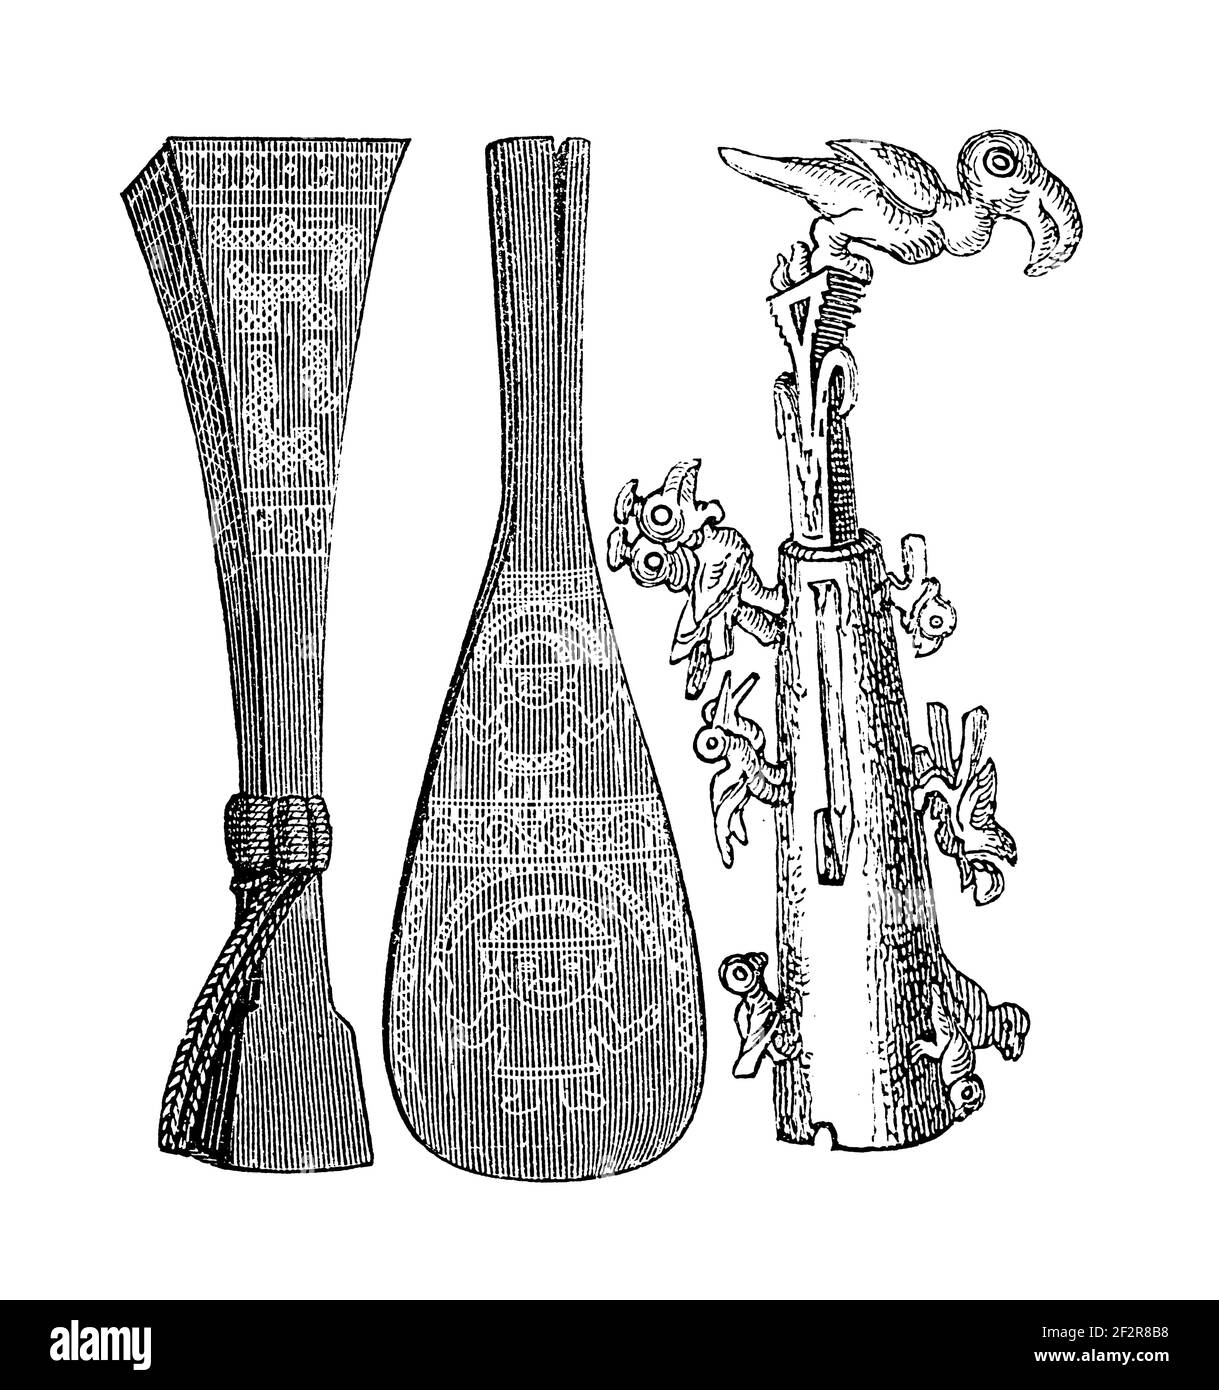 Antique engraving of Inca artefacts. Illustration published in Systematischer Bilder-Atlas zum Conversations-Lexikon, Ikonographische Encyklopaedie de Stock Photo